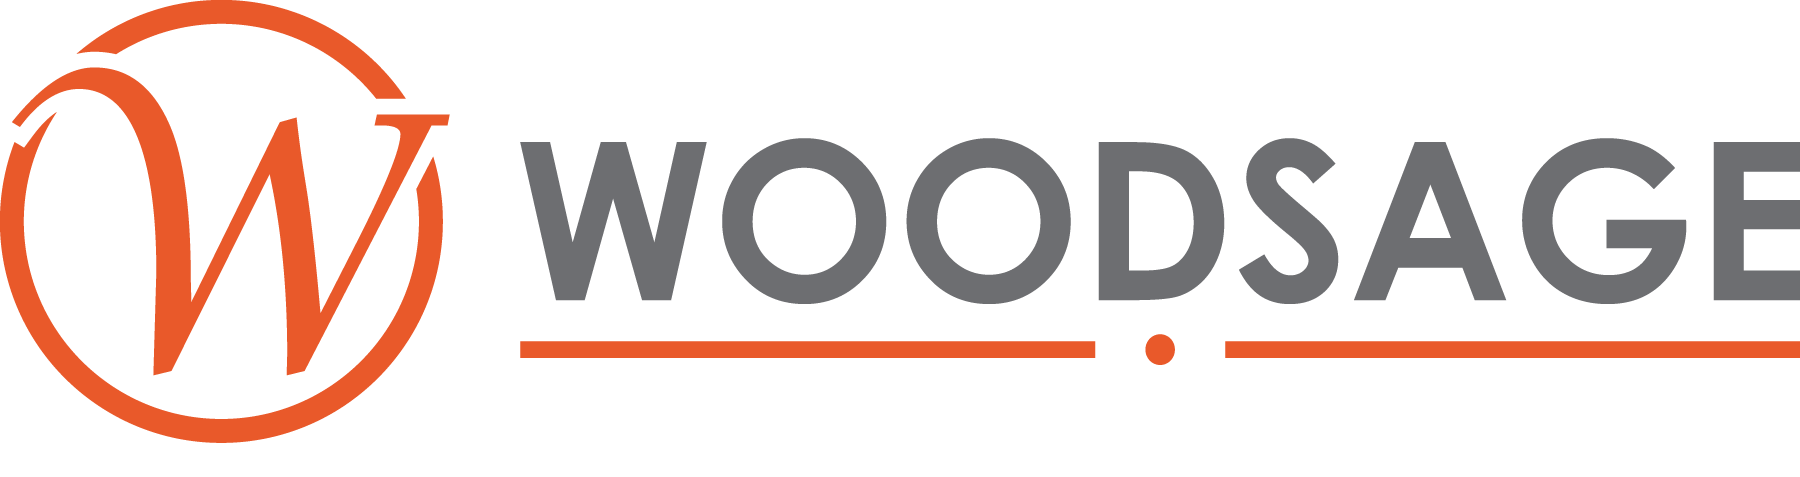 Woodsage Logo Only